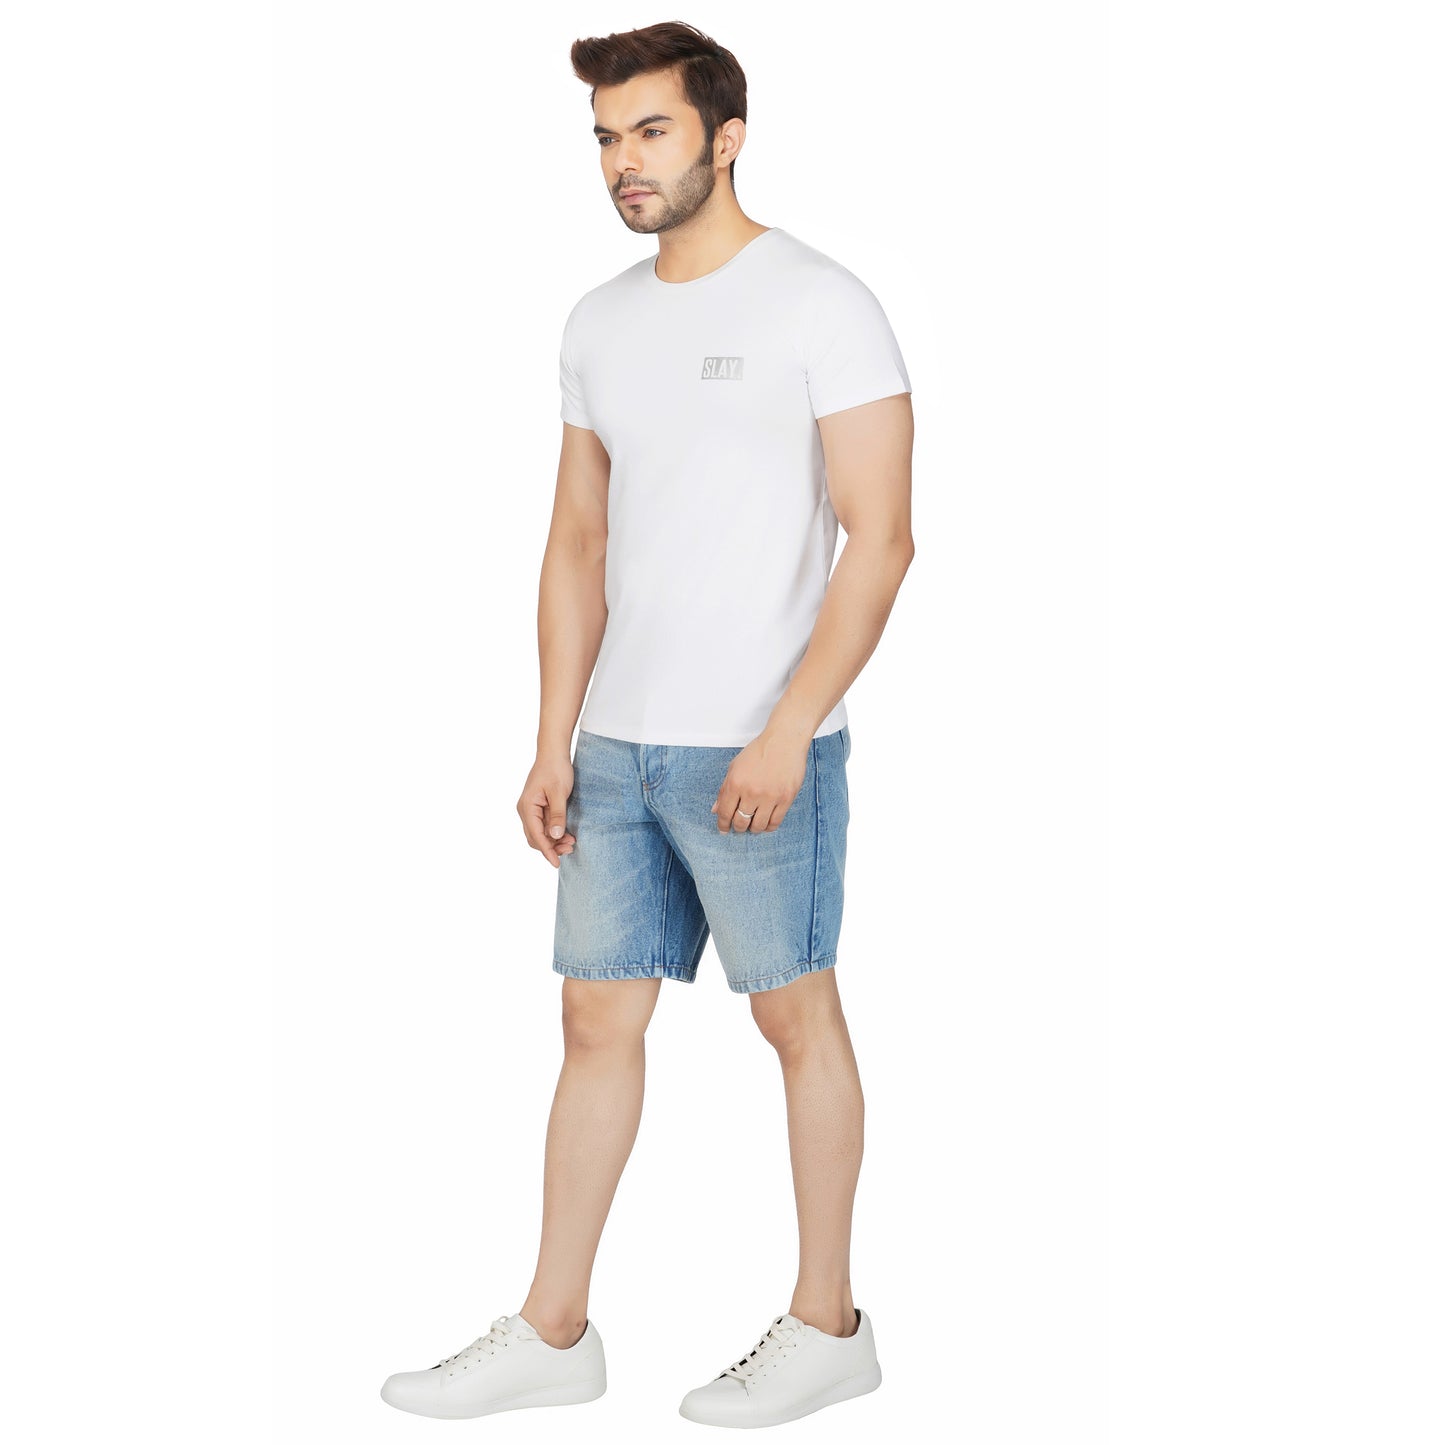 SLAY. Men's Light Blue Washed Button-Down Denim Shorts-clothing-to-slay.myshopify.com-Denim Shorts